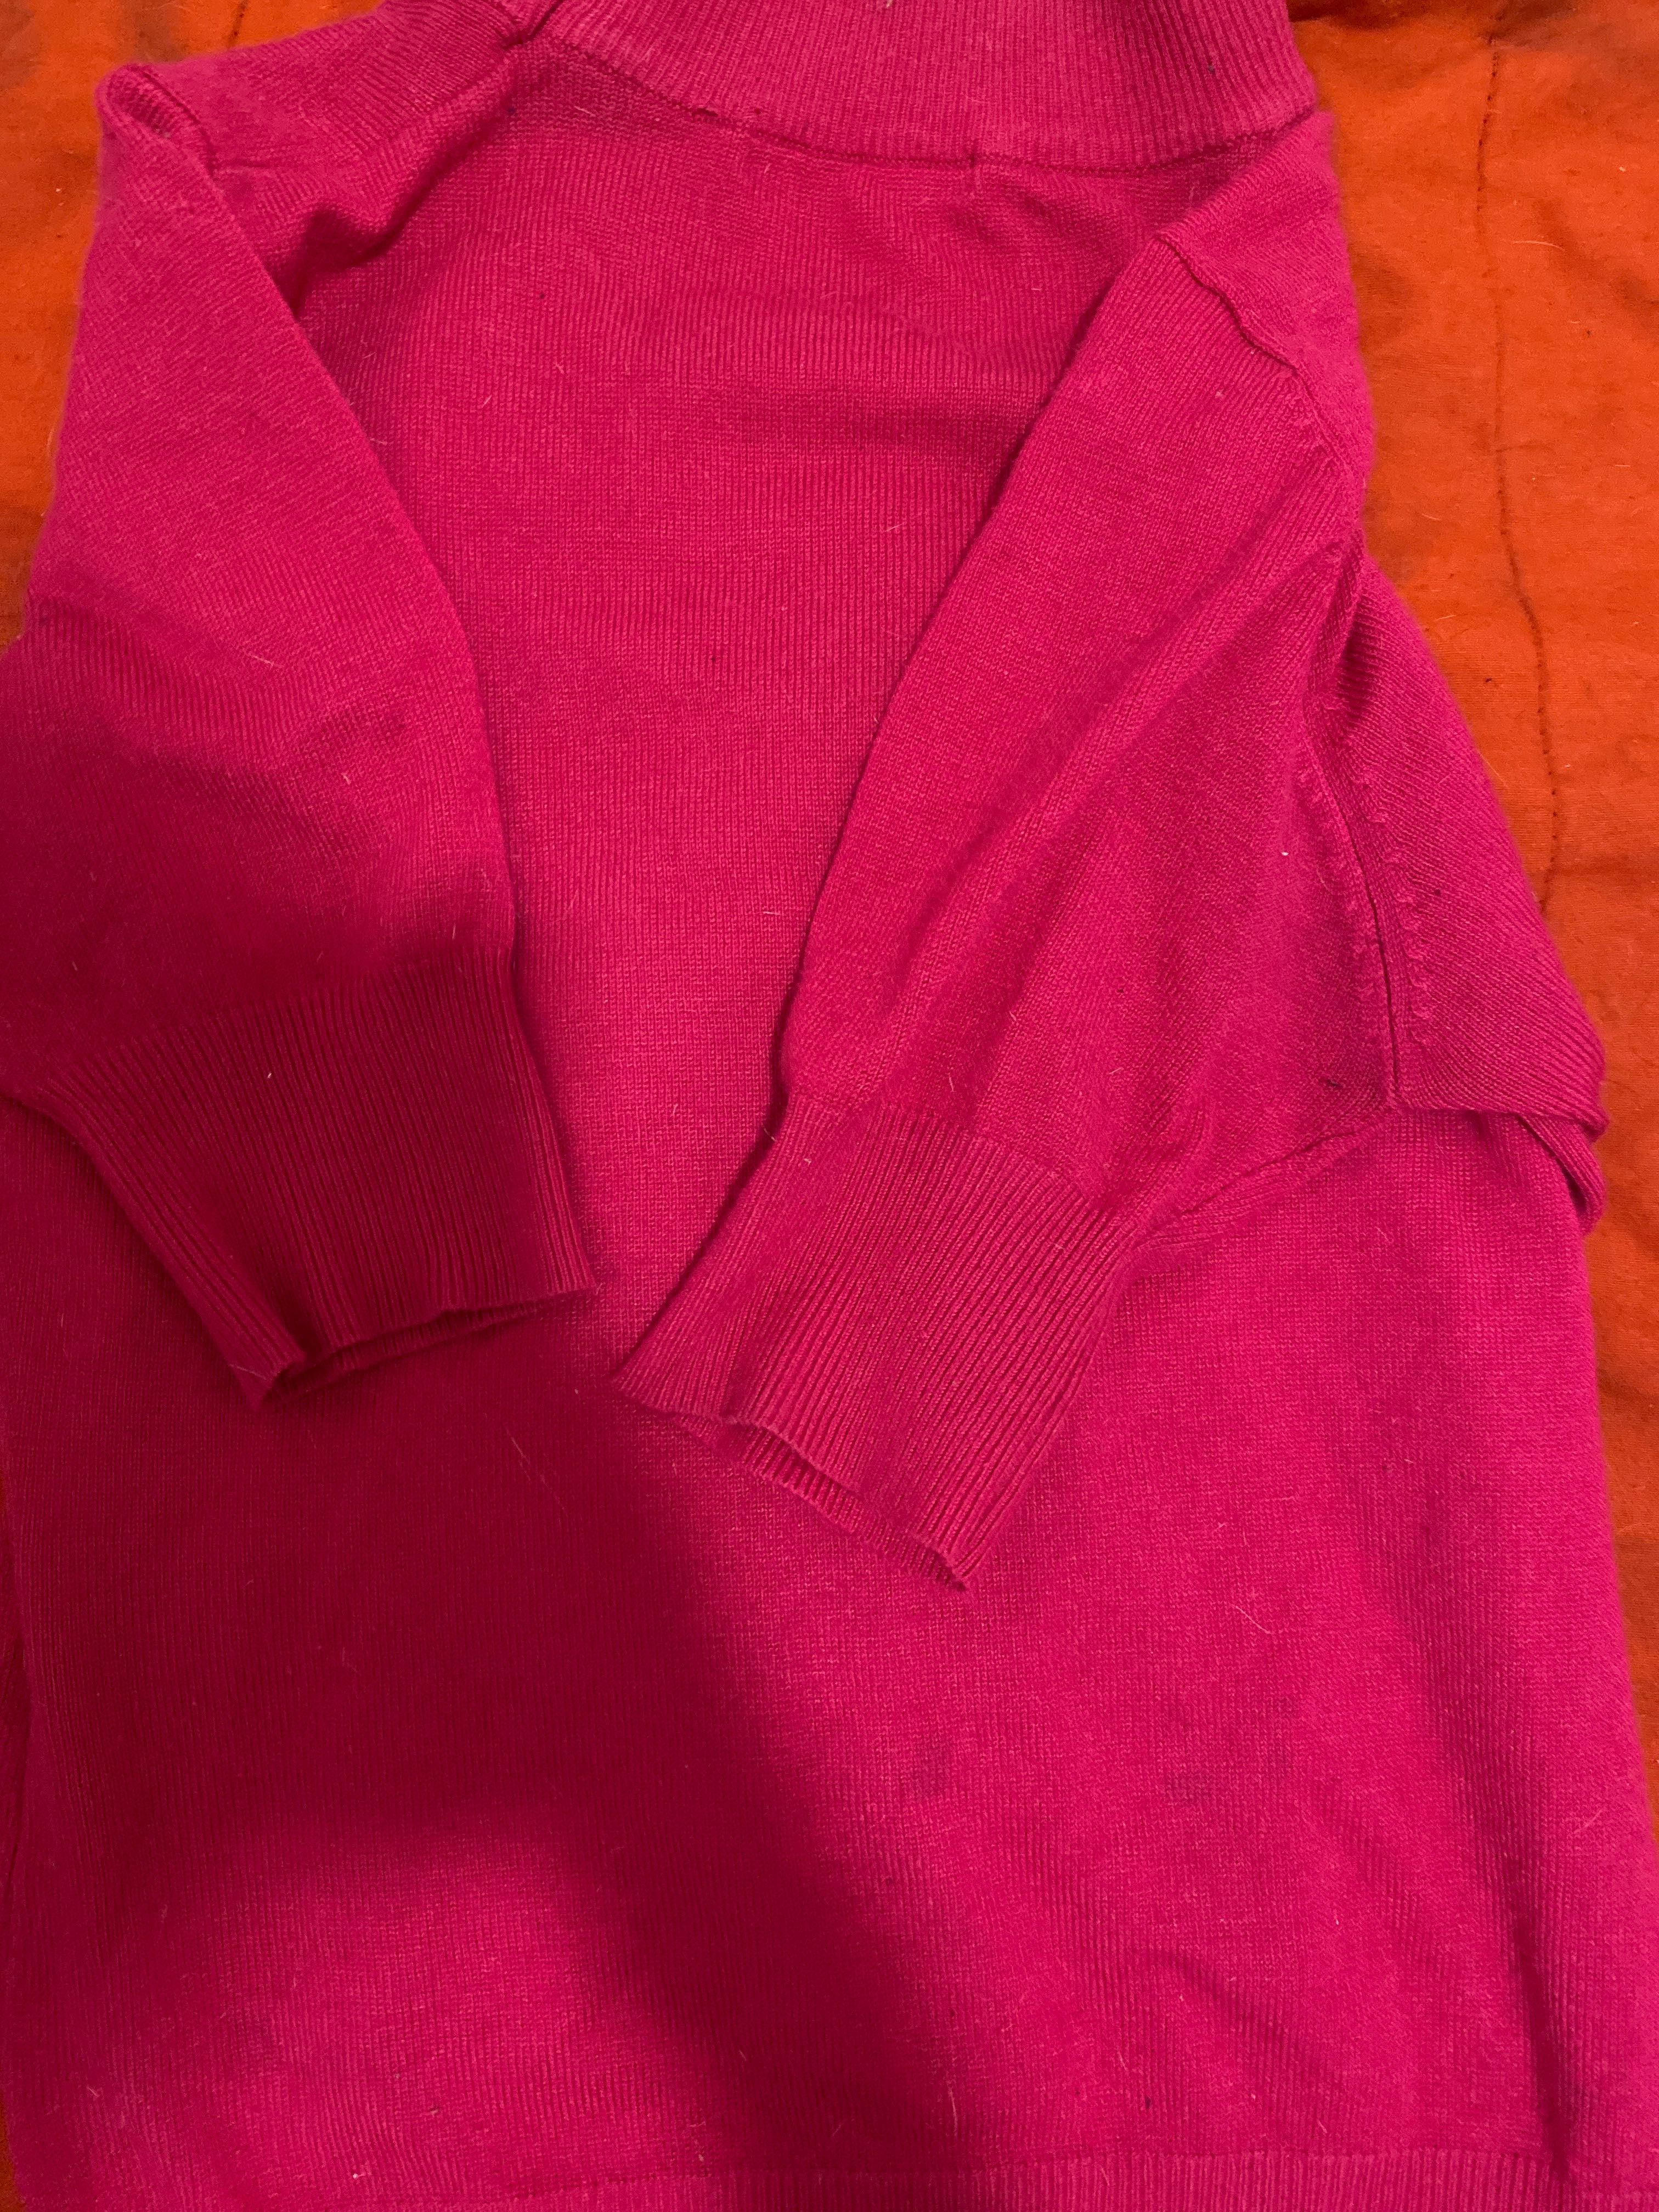 Camisola rosa malha